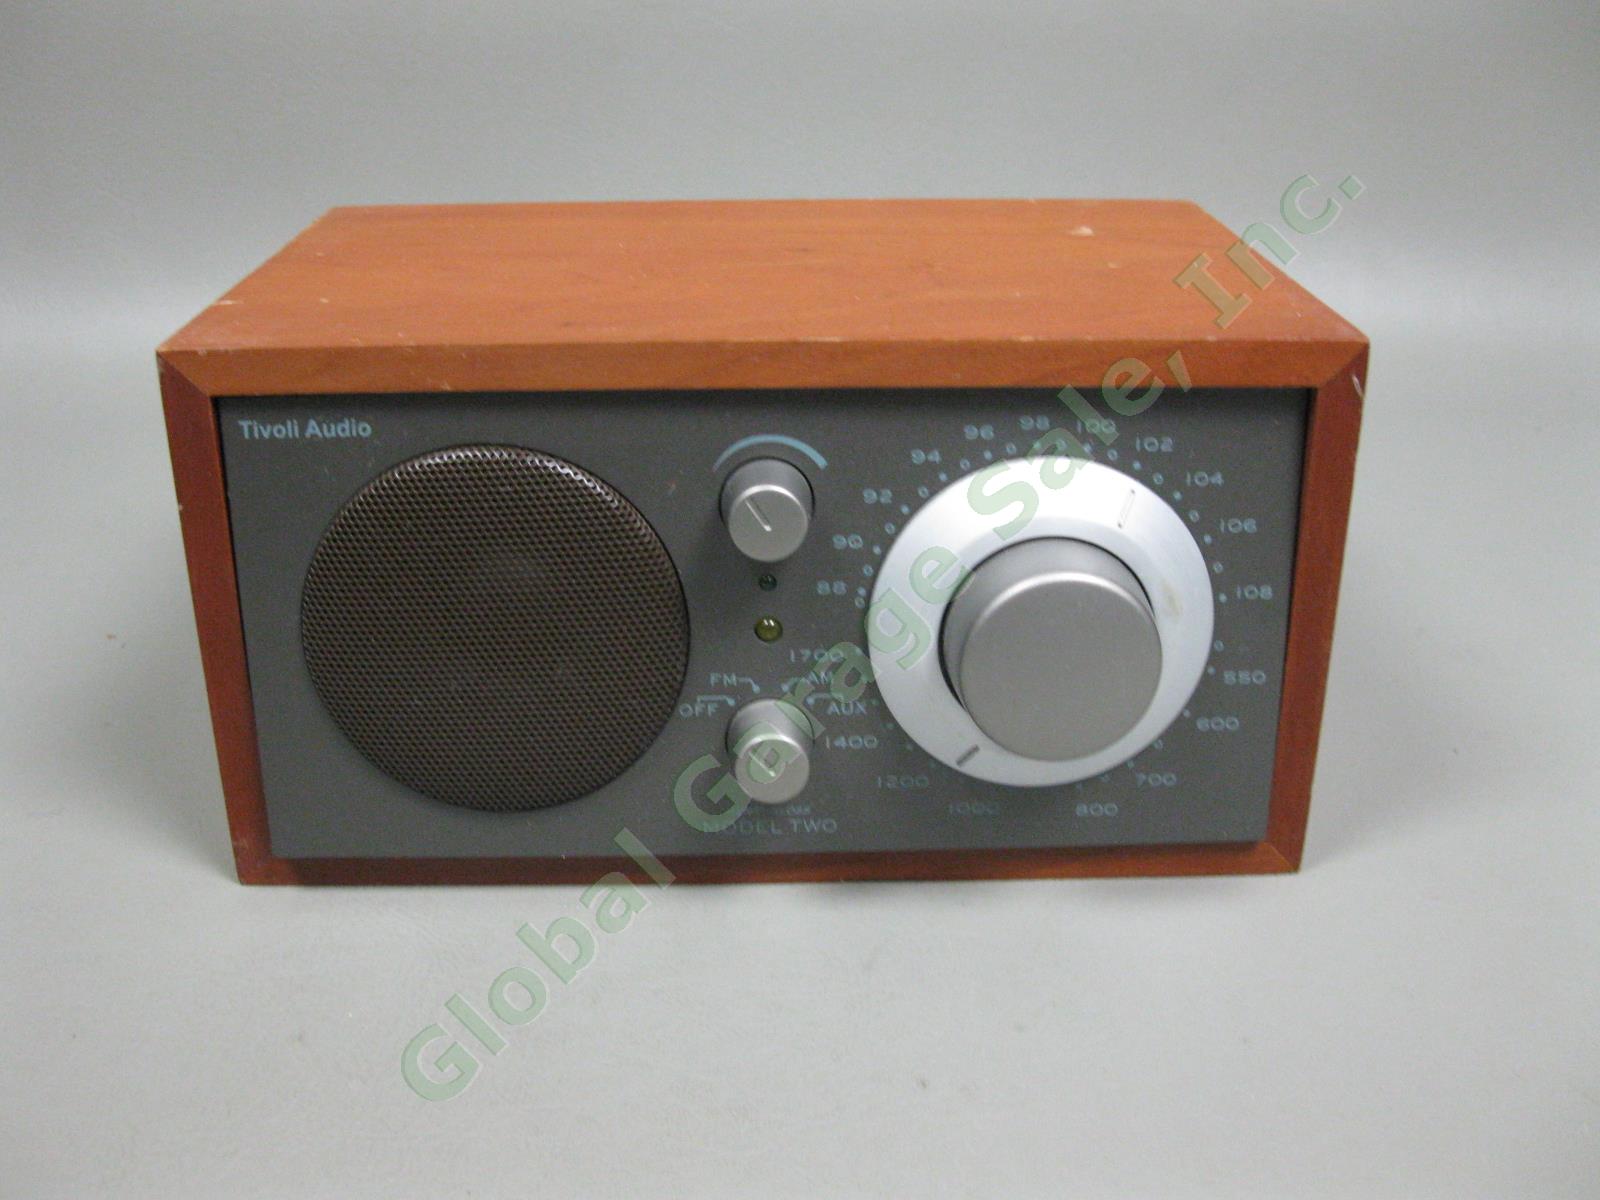 Tivoli Audio Model Two Henry Kloss AM/FM Radio Subwoofer Speakers Tested IWC NR 1